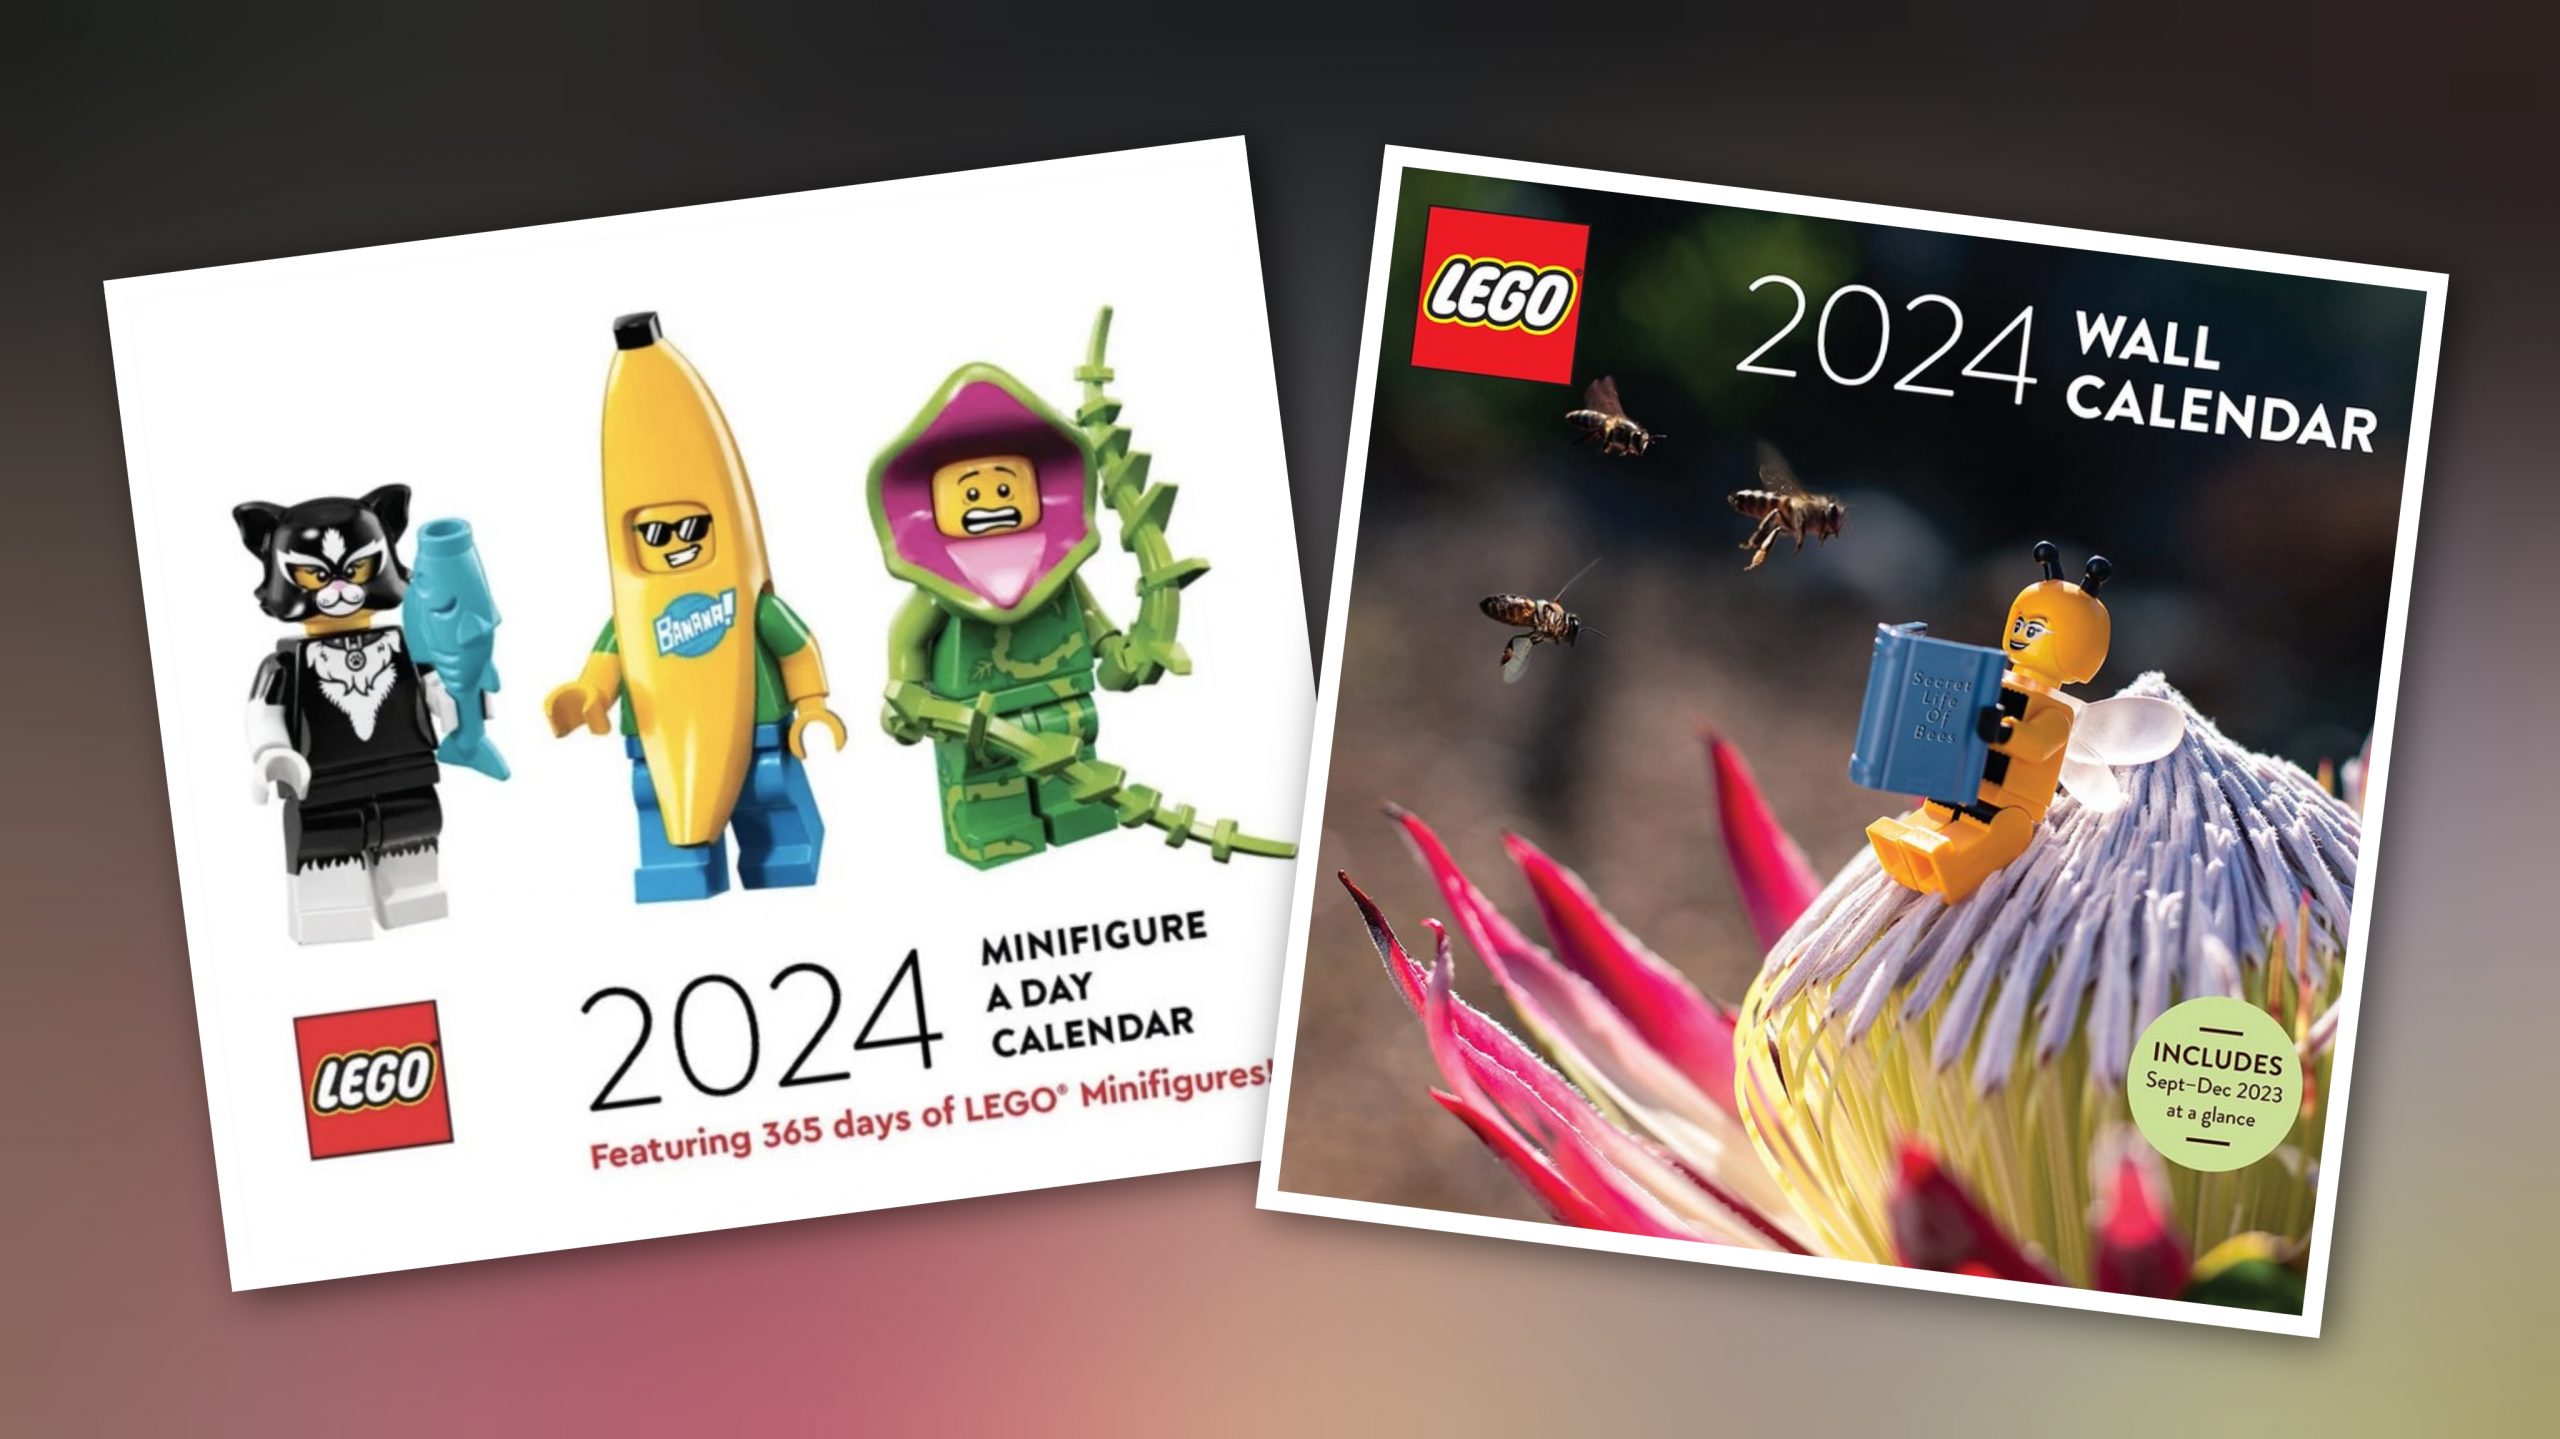 LEGO Minifigure A Day Calendar 2024 The Brick Post!